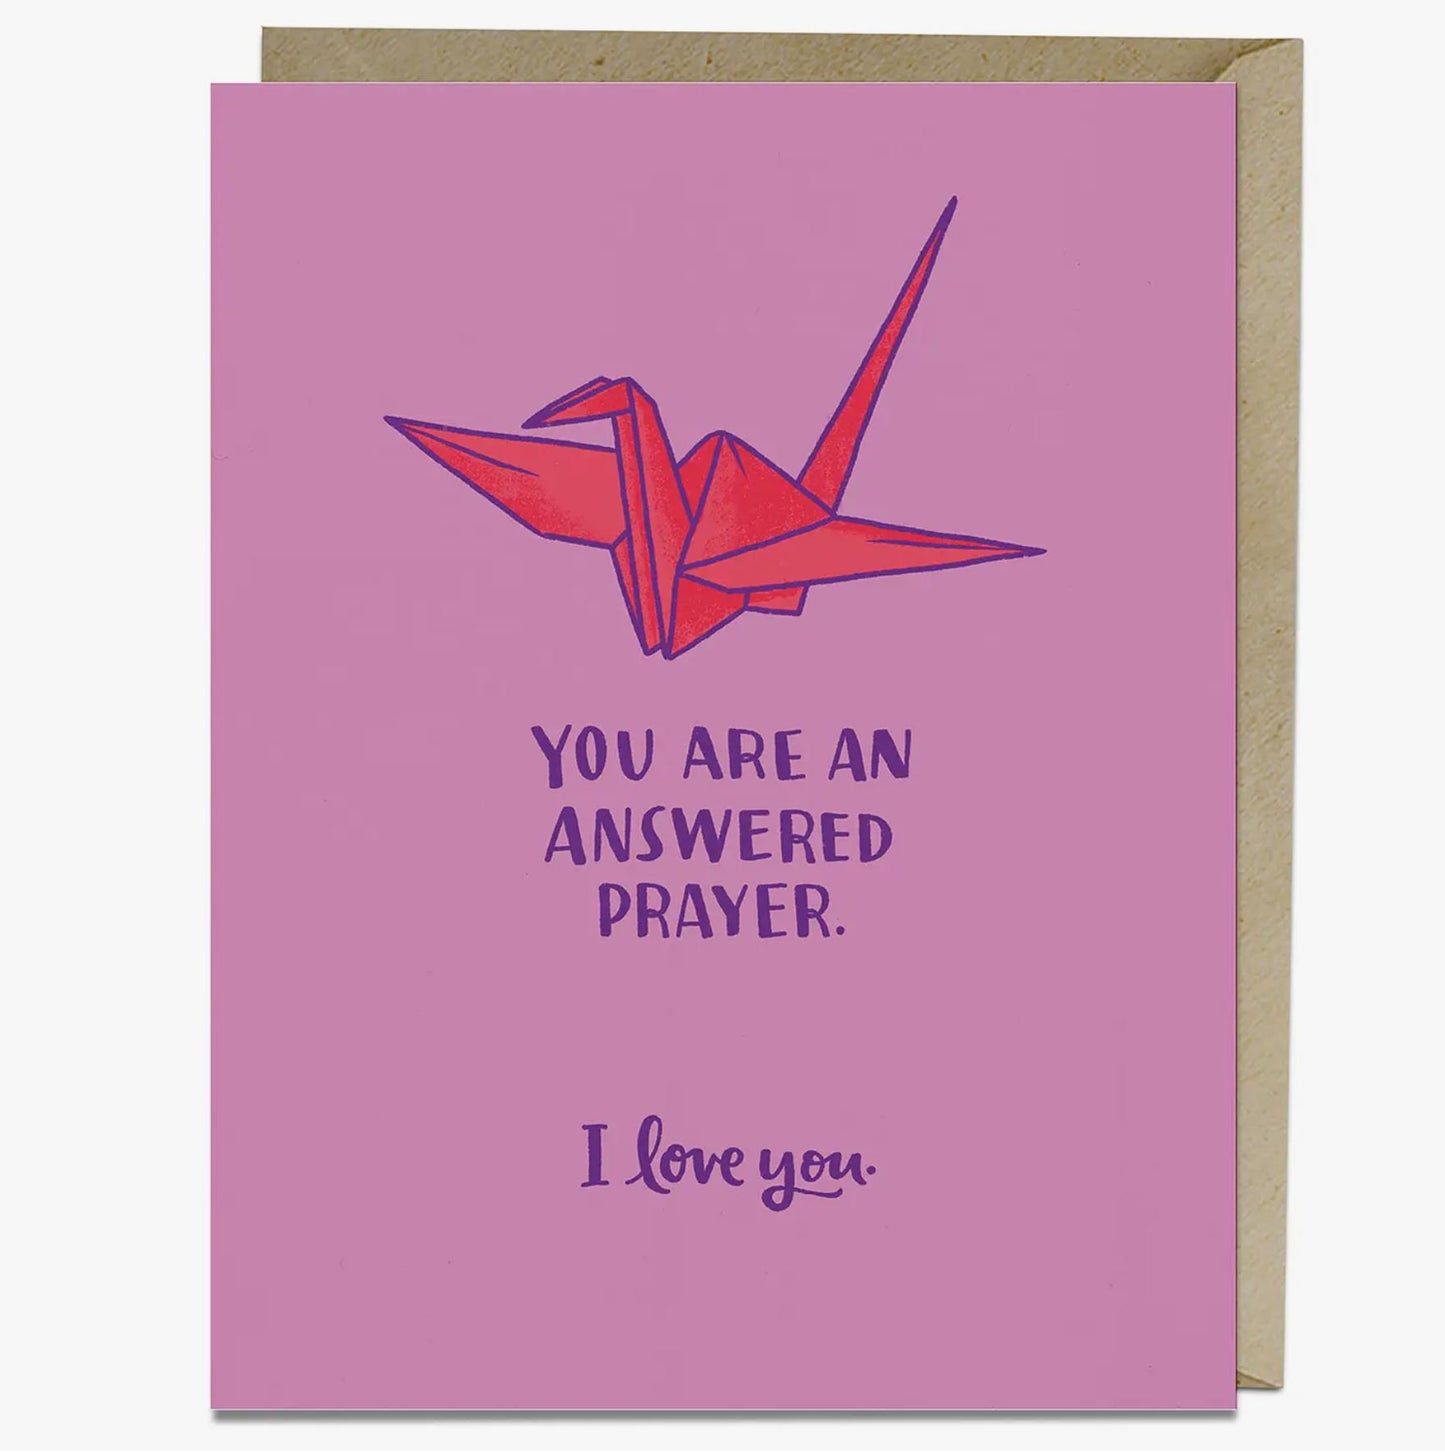 Answered Prayer Love Card